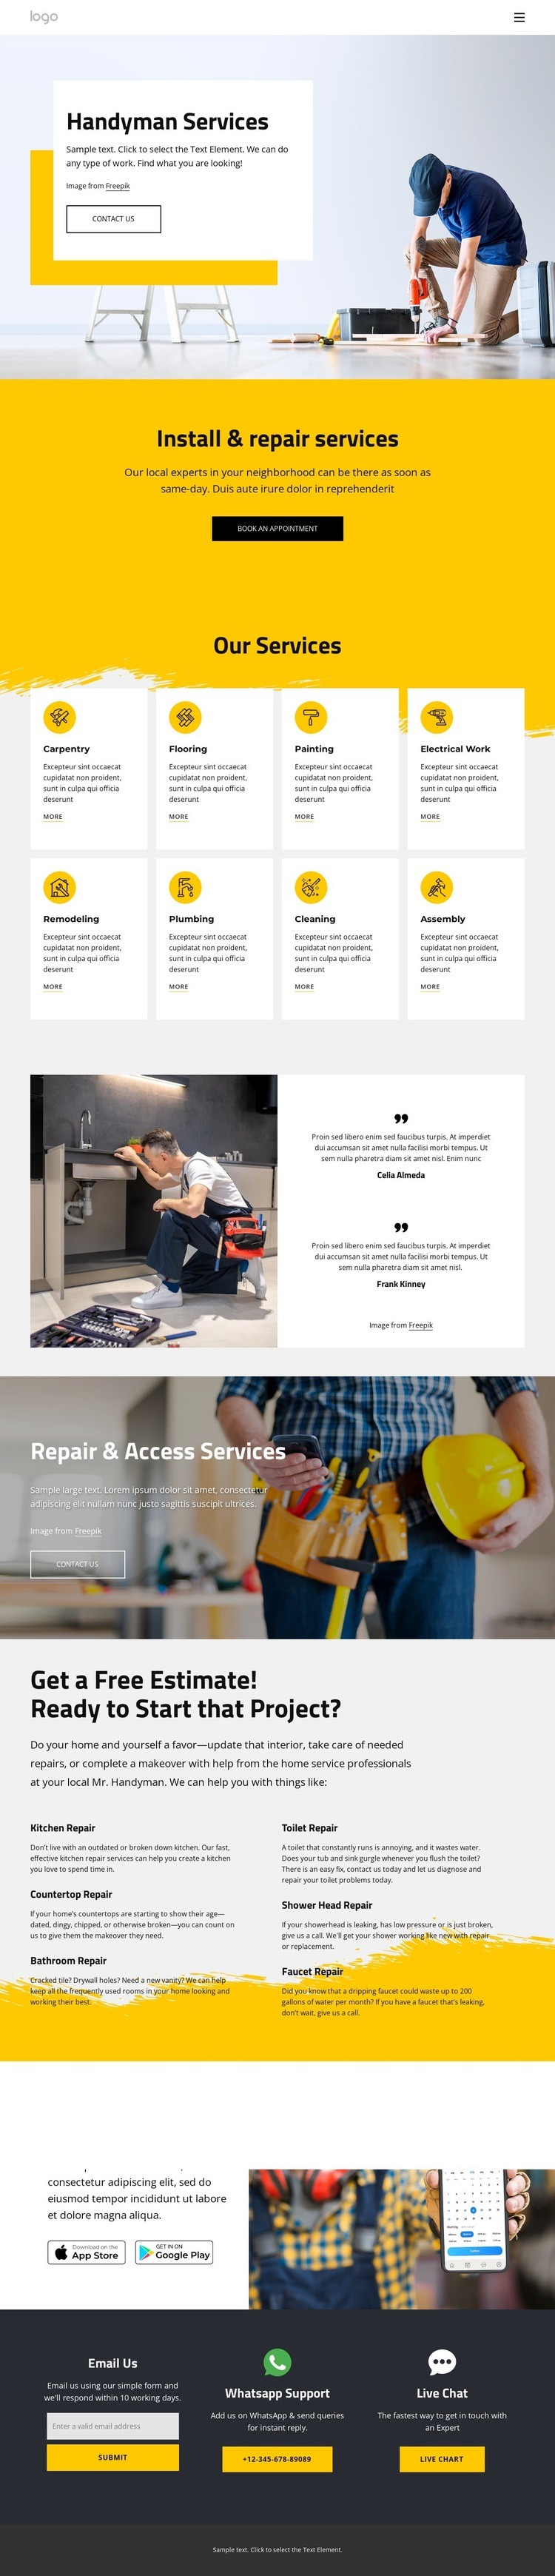 Handyman services Homepage Design